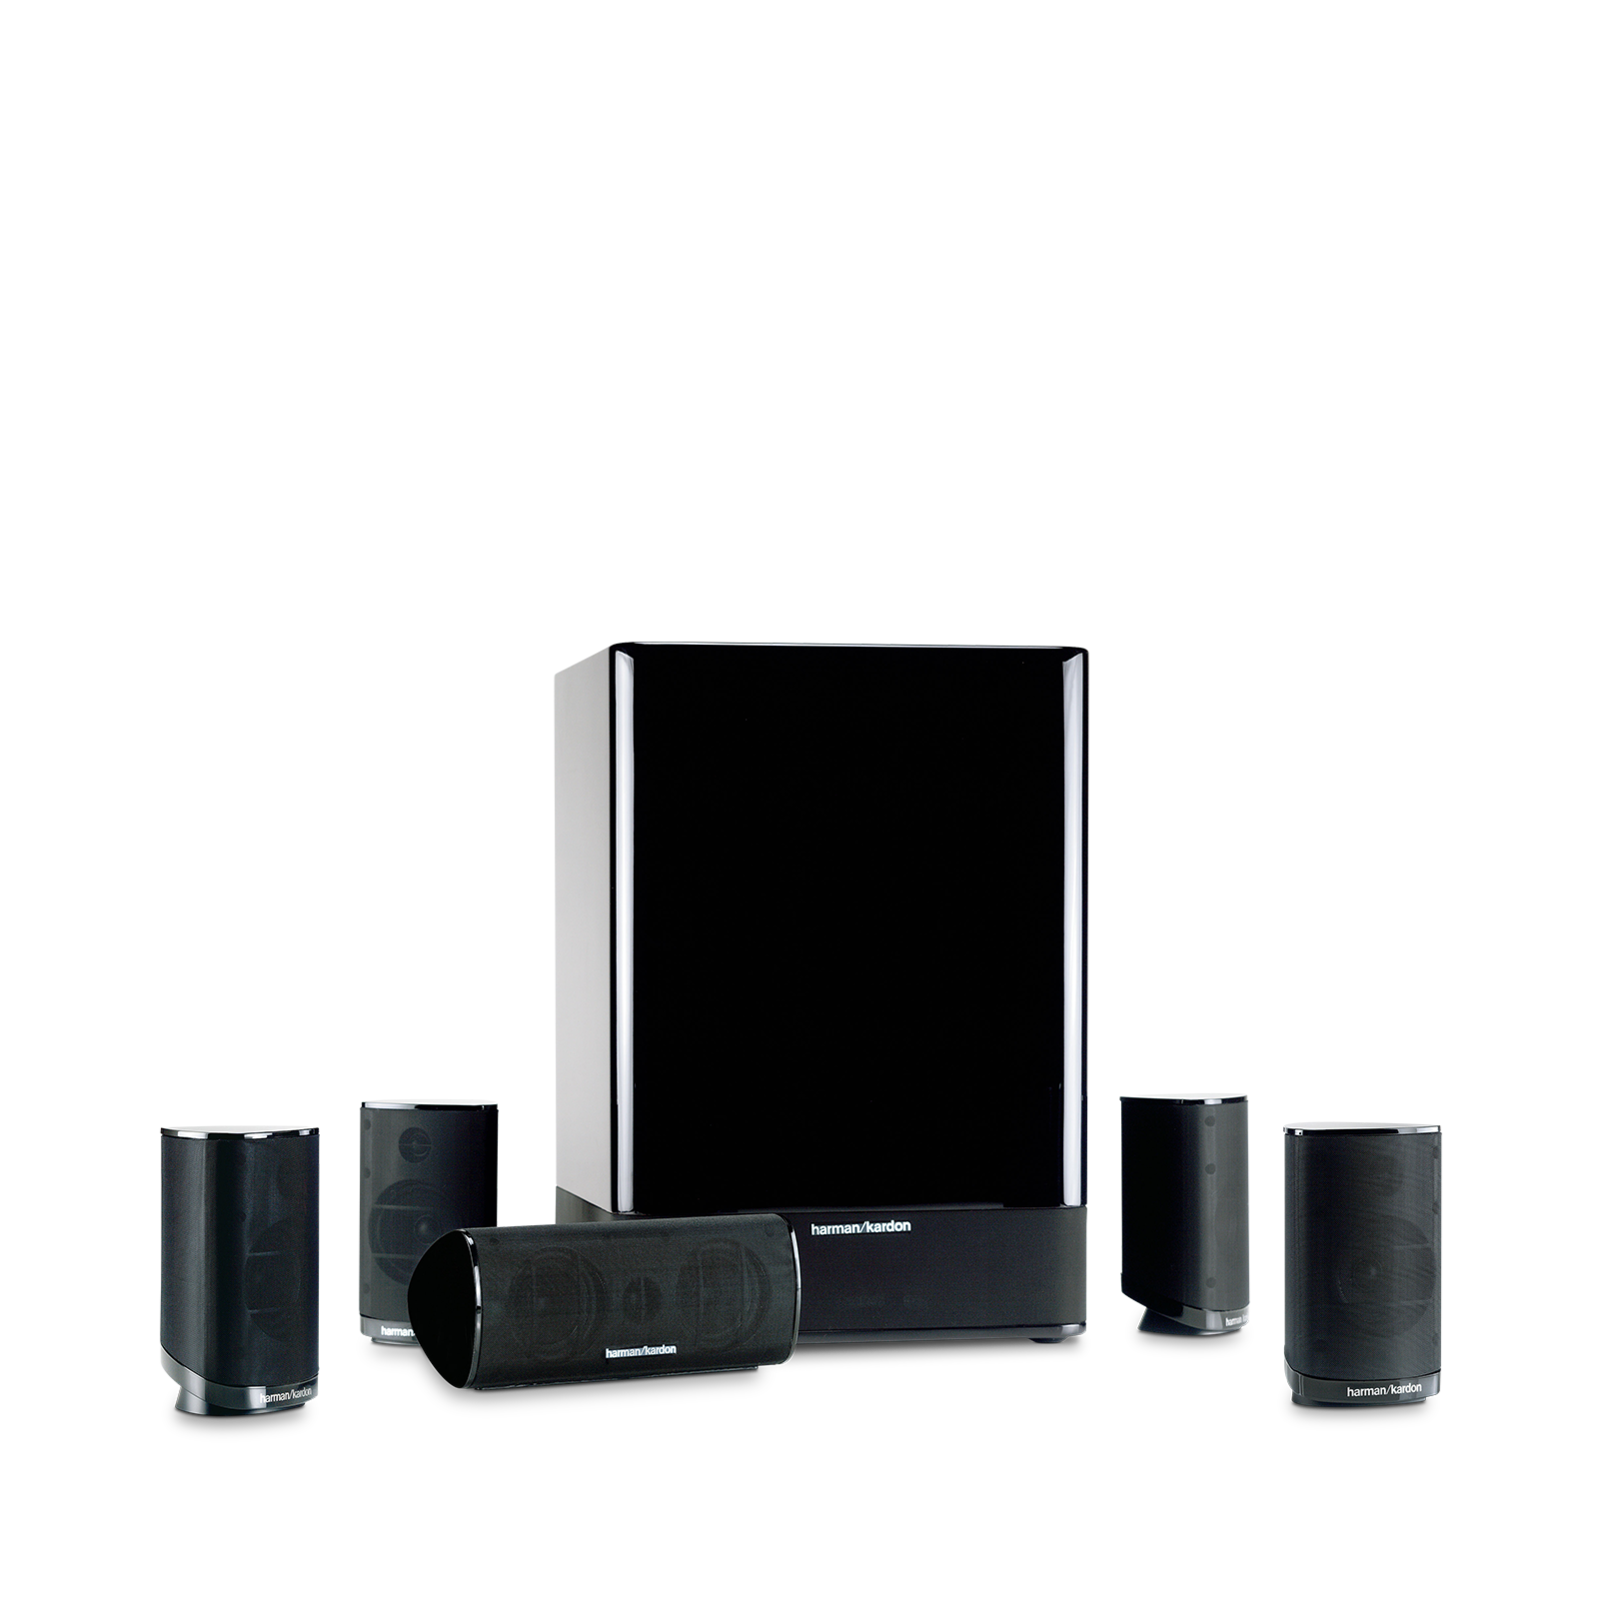 HKTS 15 - Black - 5.1 Home Theater Speaker System (4 Satellites, 1 Center, and a 10 inch 100-Watt Powered Subwoofer) (CEN TS15,SAT TS15,SUB TS15) - Hero